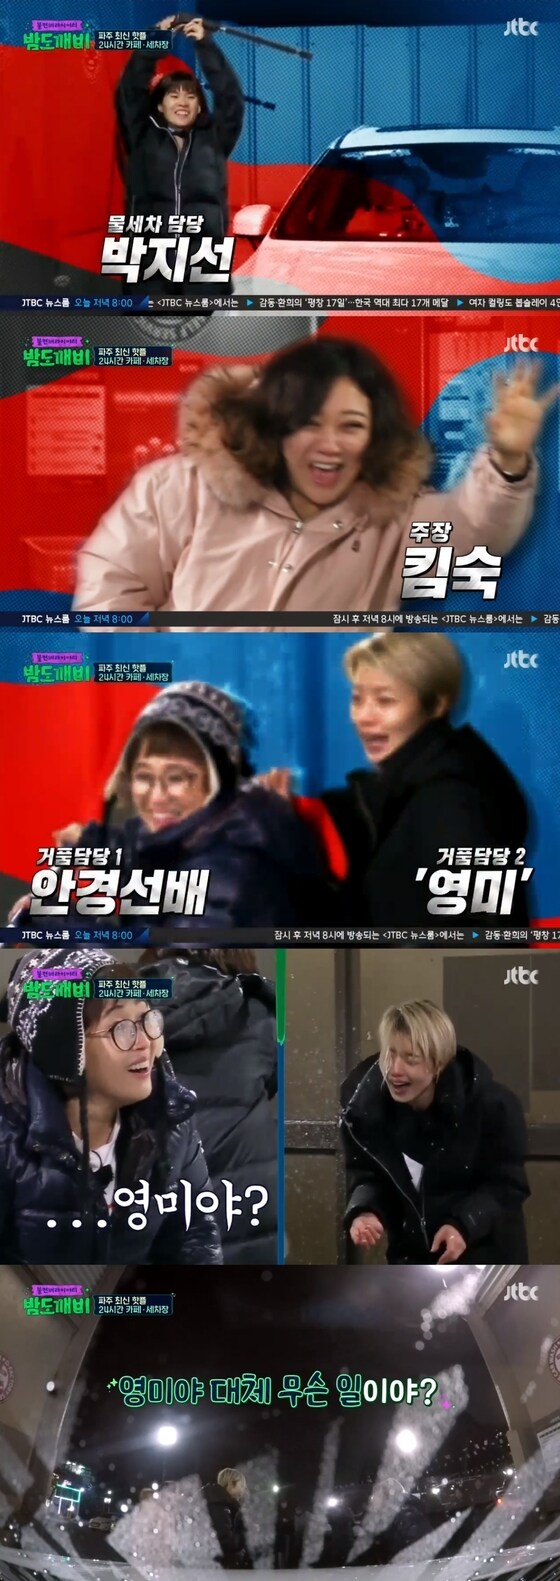 JTBC '밤도깨비' 캡처© News1